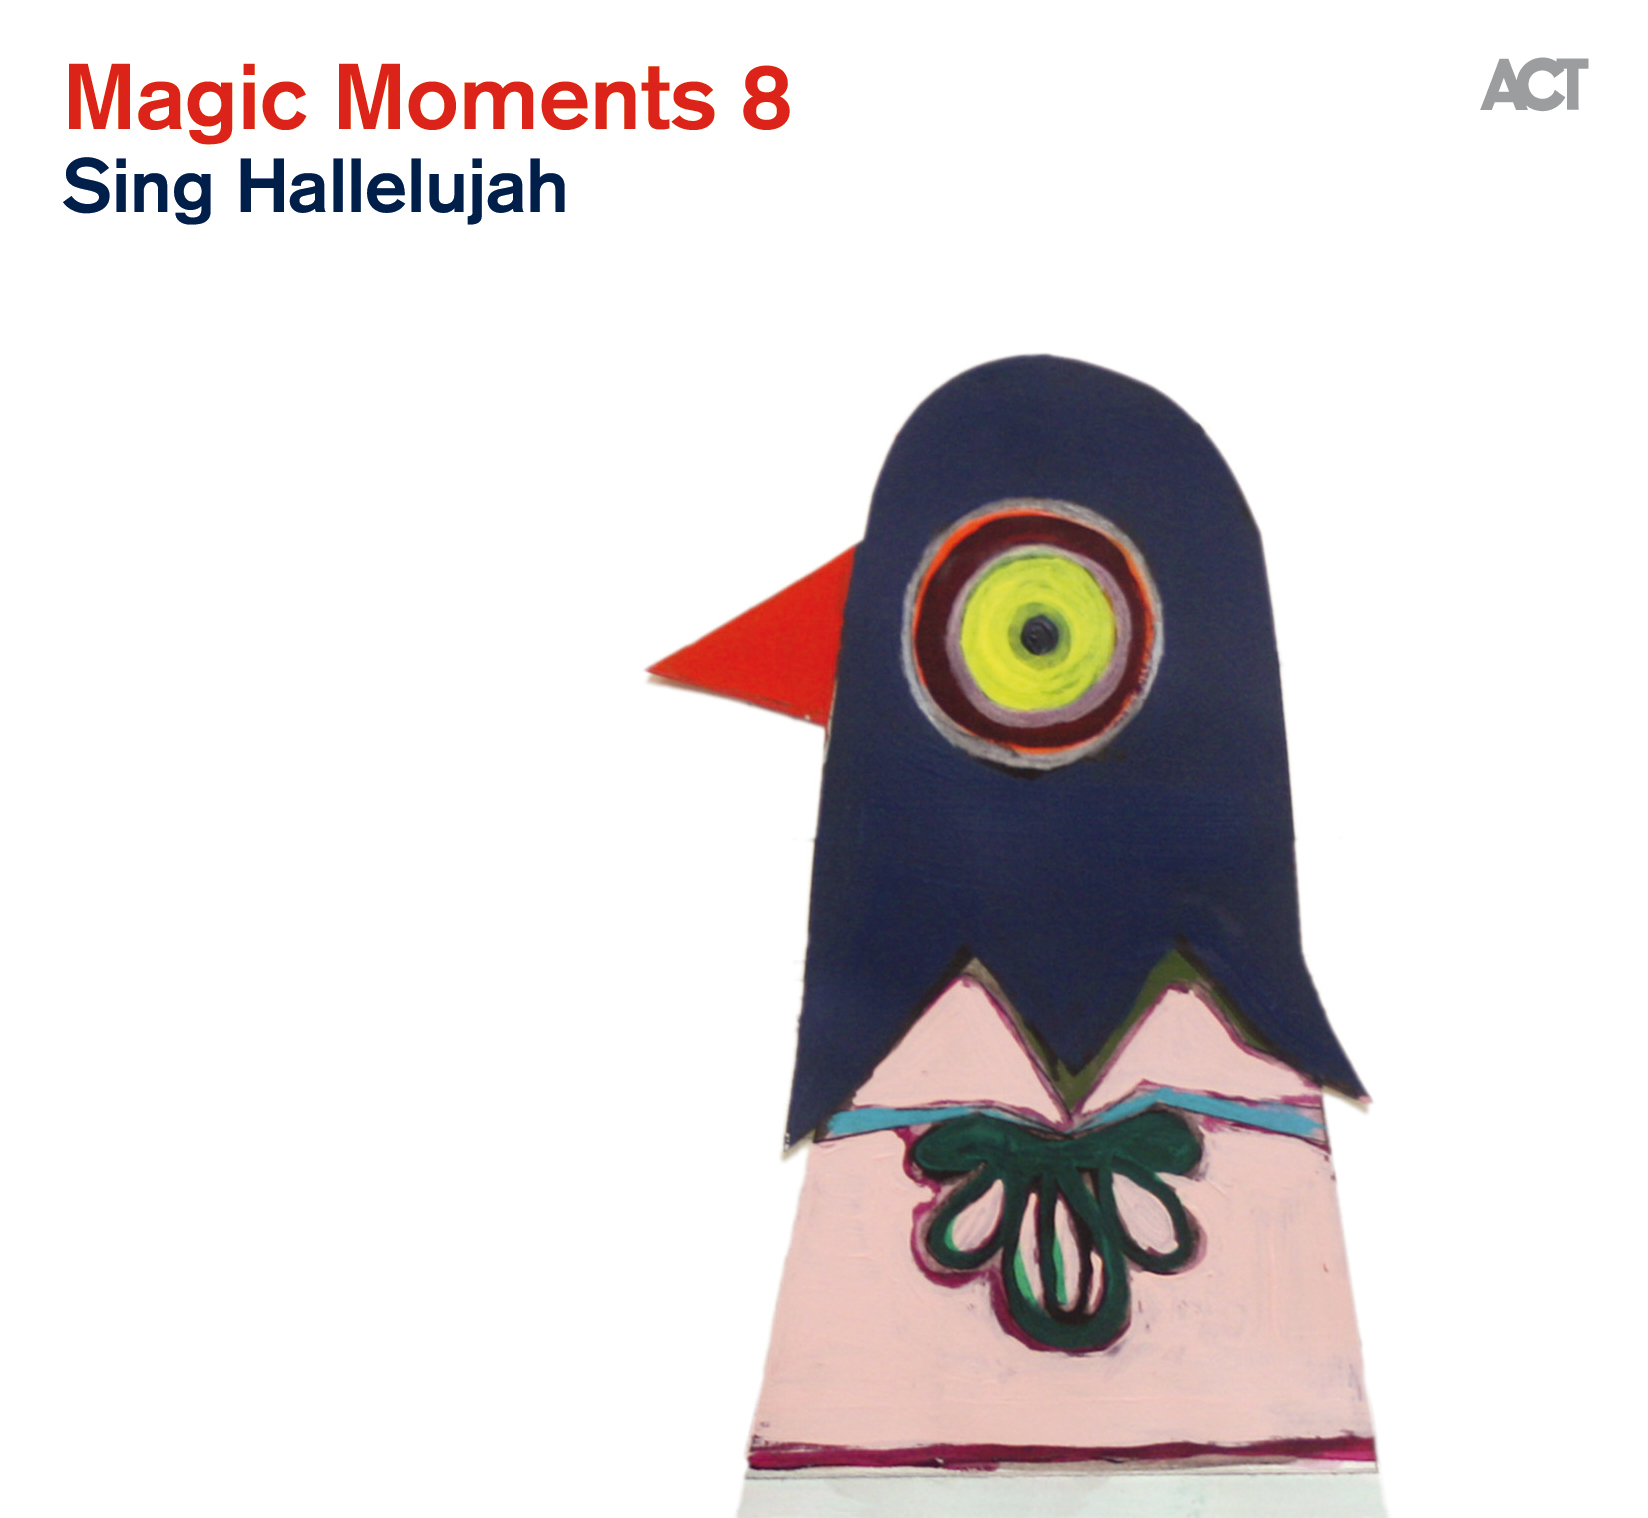 Magic Moments 8 "Sing Hallelujah"